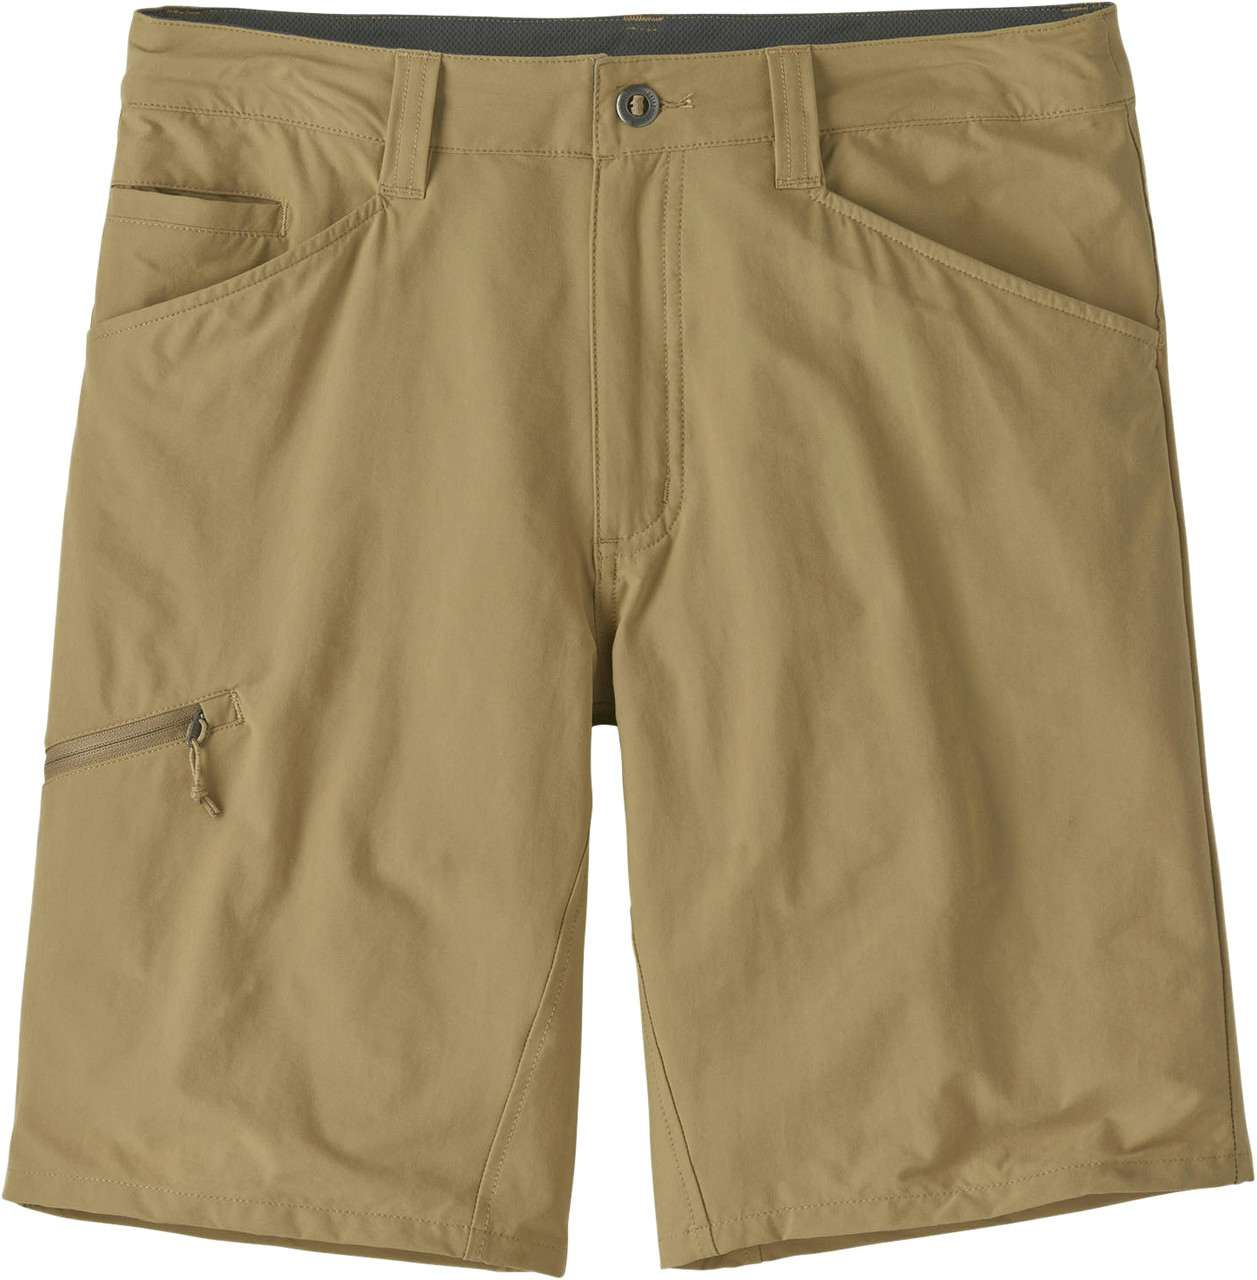 Quandary 10" Shorts Classic Tan